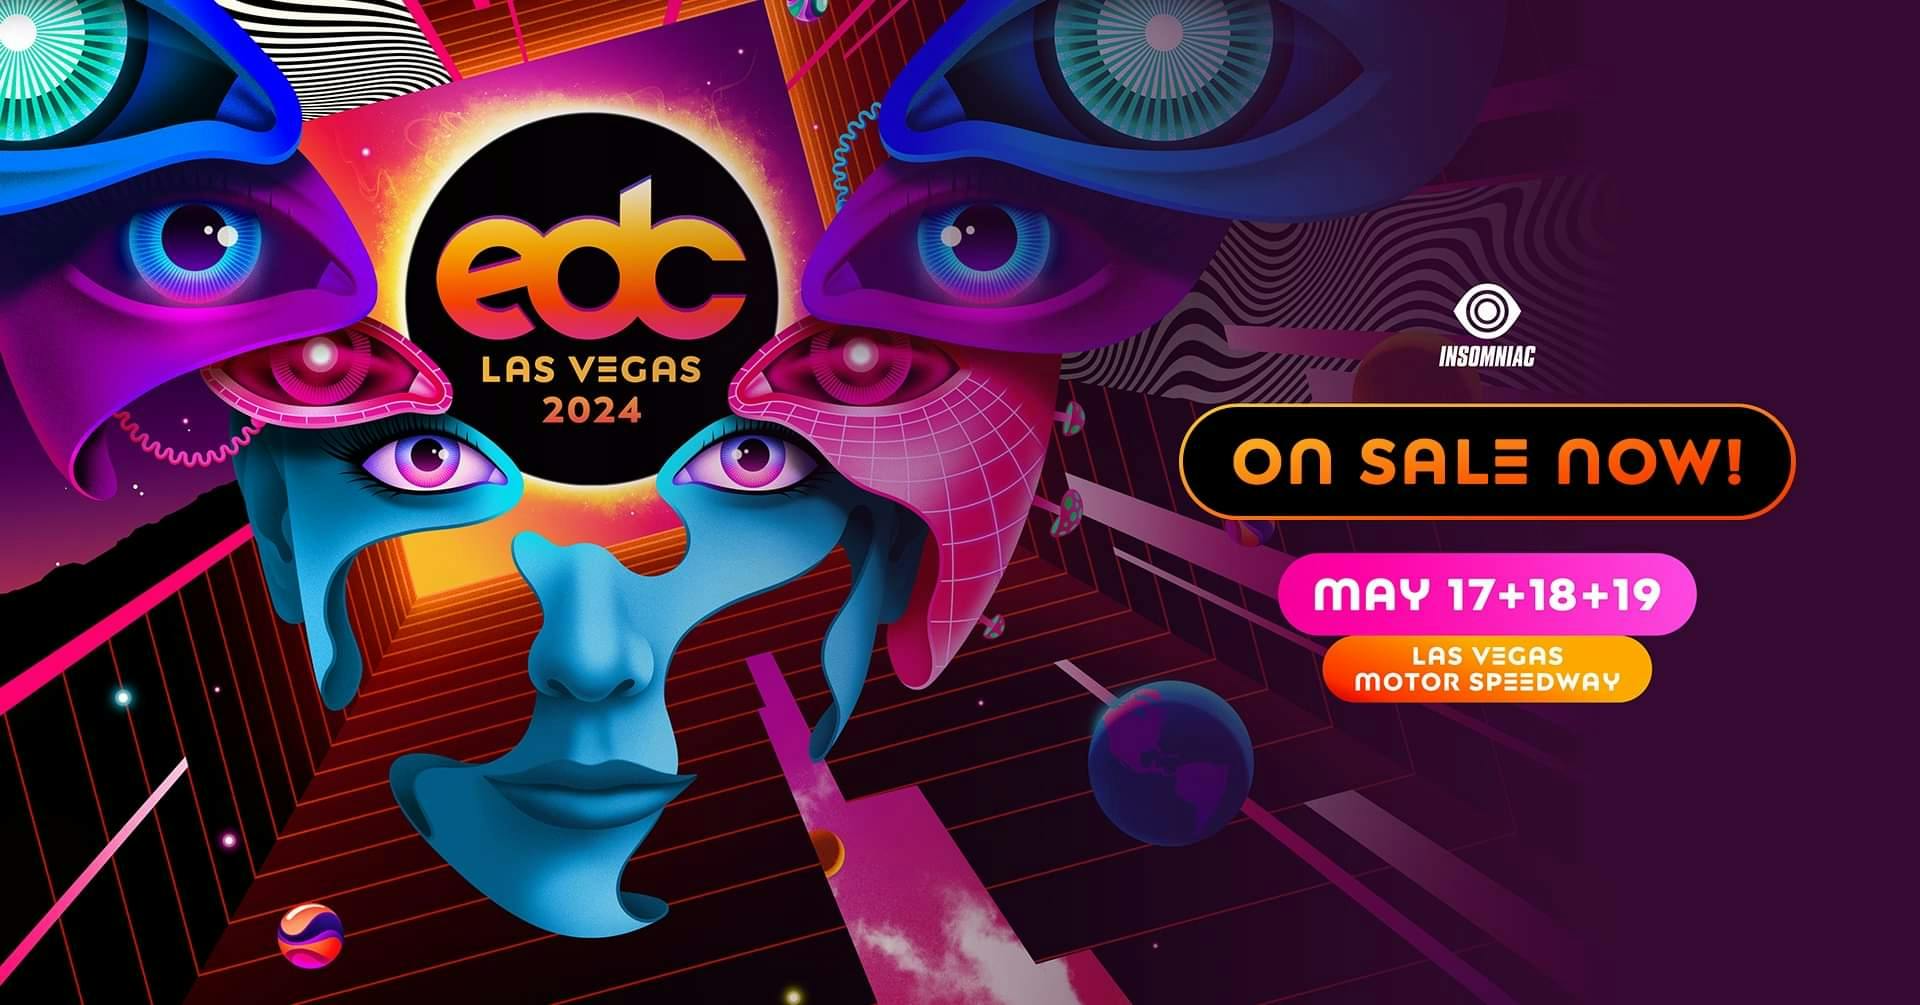 EDC Las Vegas 2024 at EDC (Electric Daisy Carnival) Friday, May 17